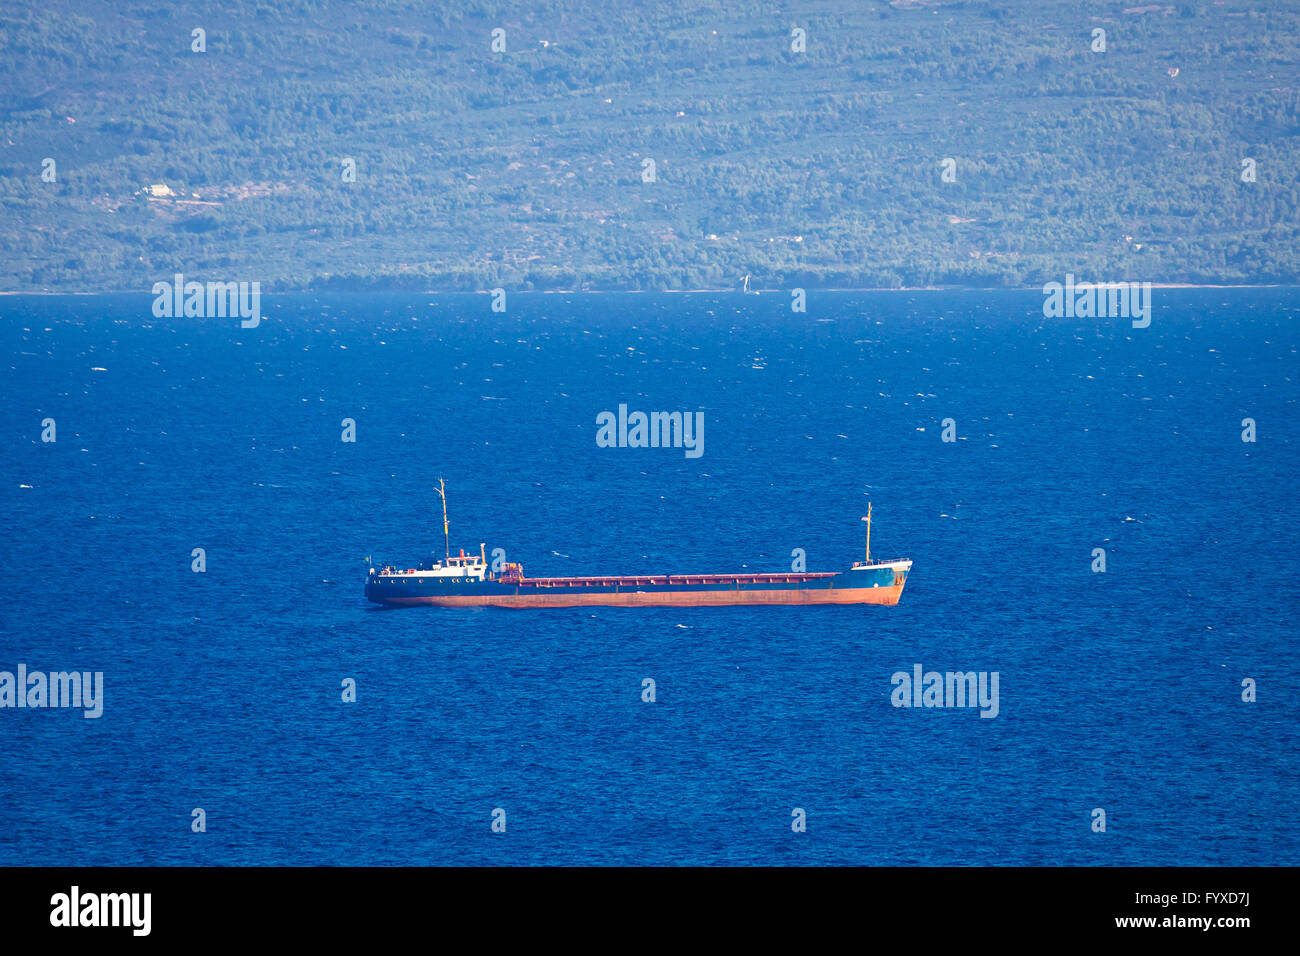 Oil tanker ship on sea Stock Photo